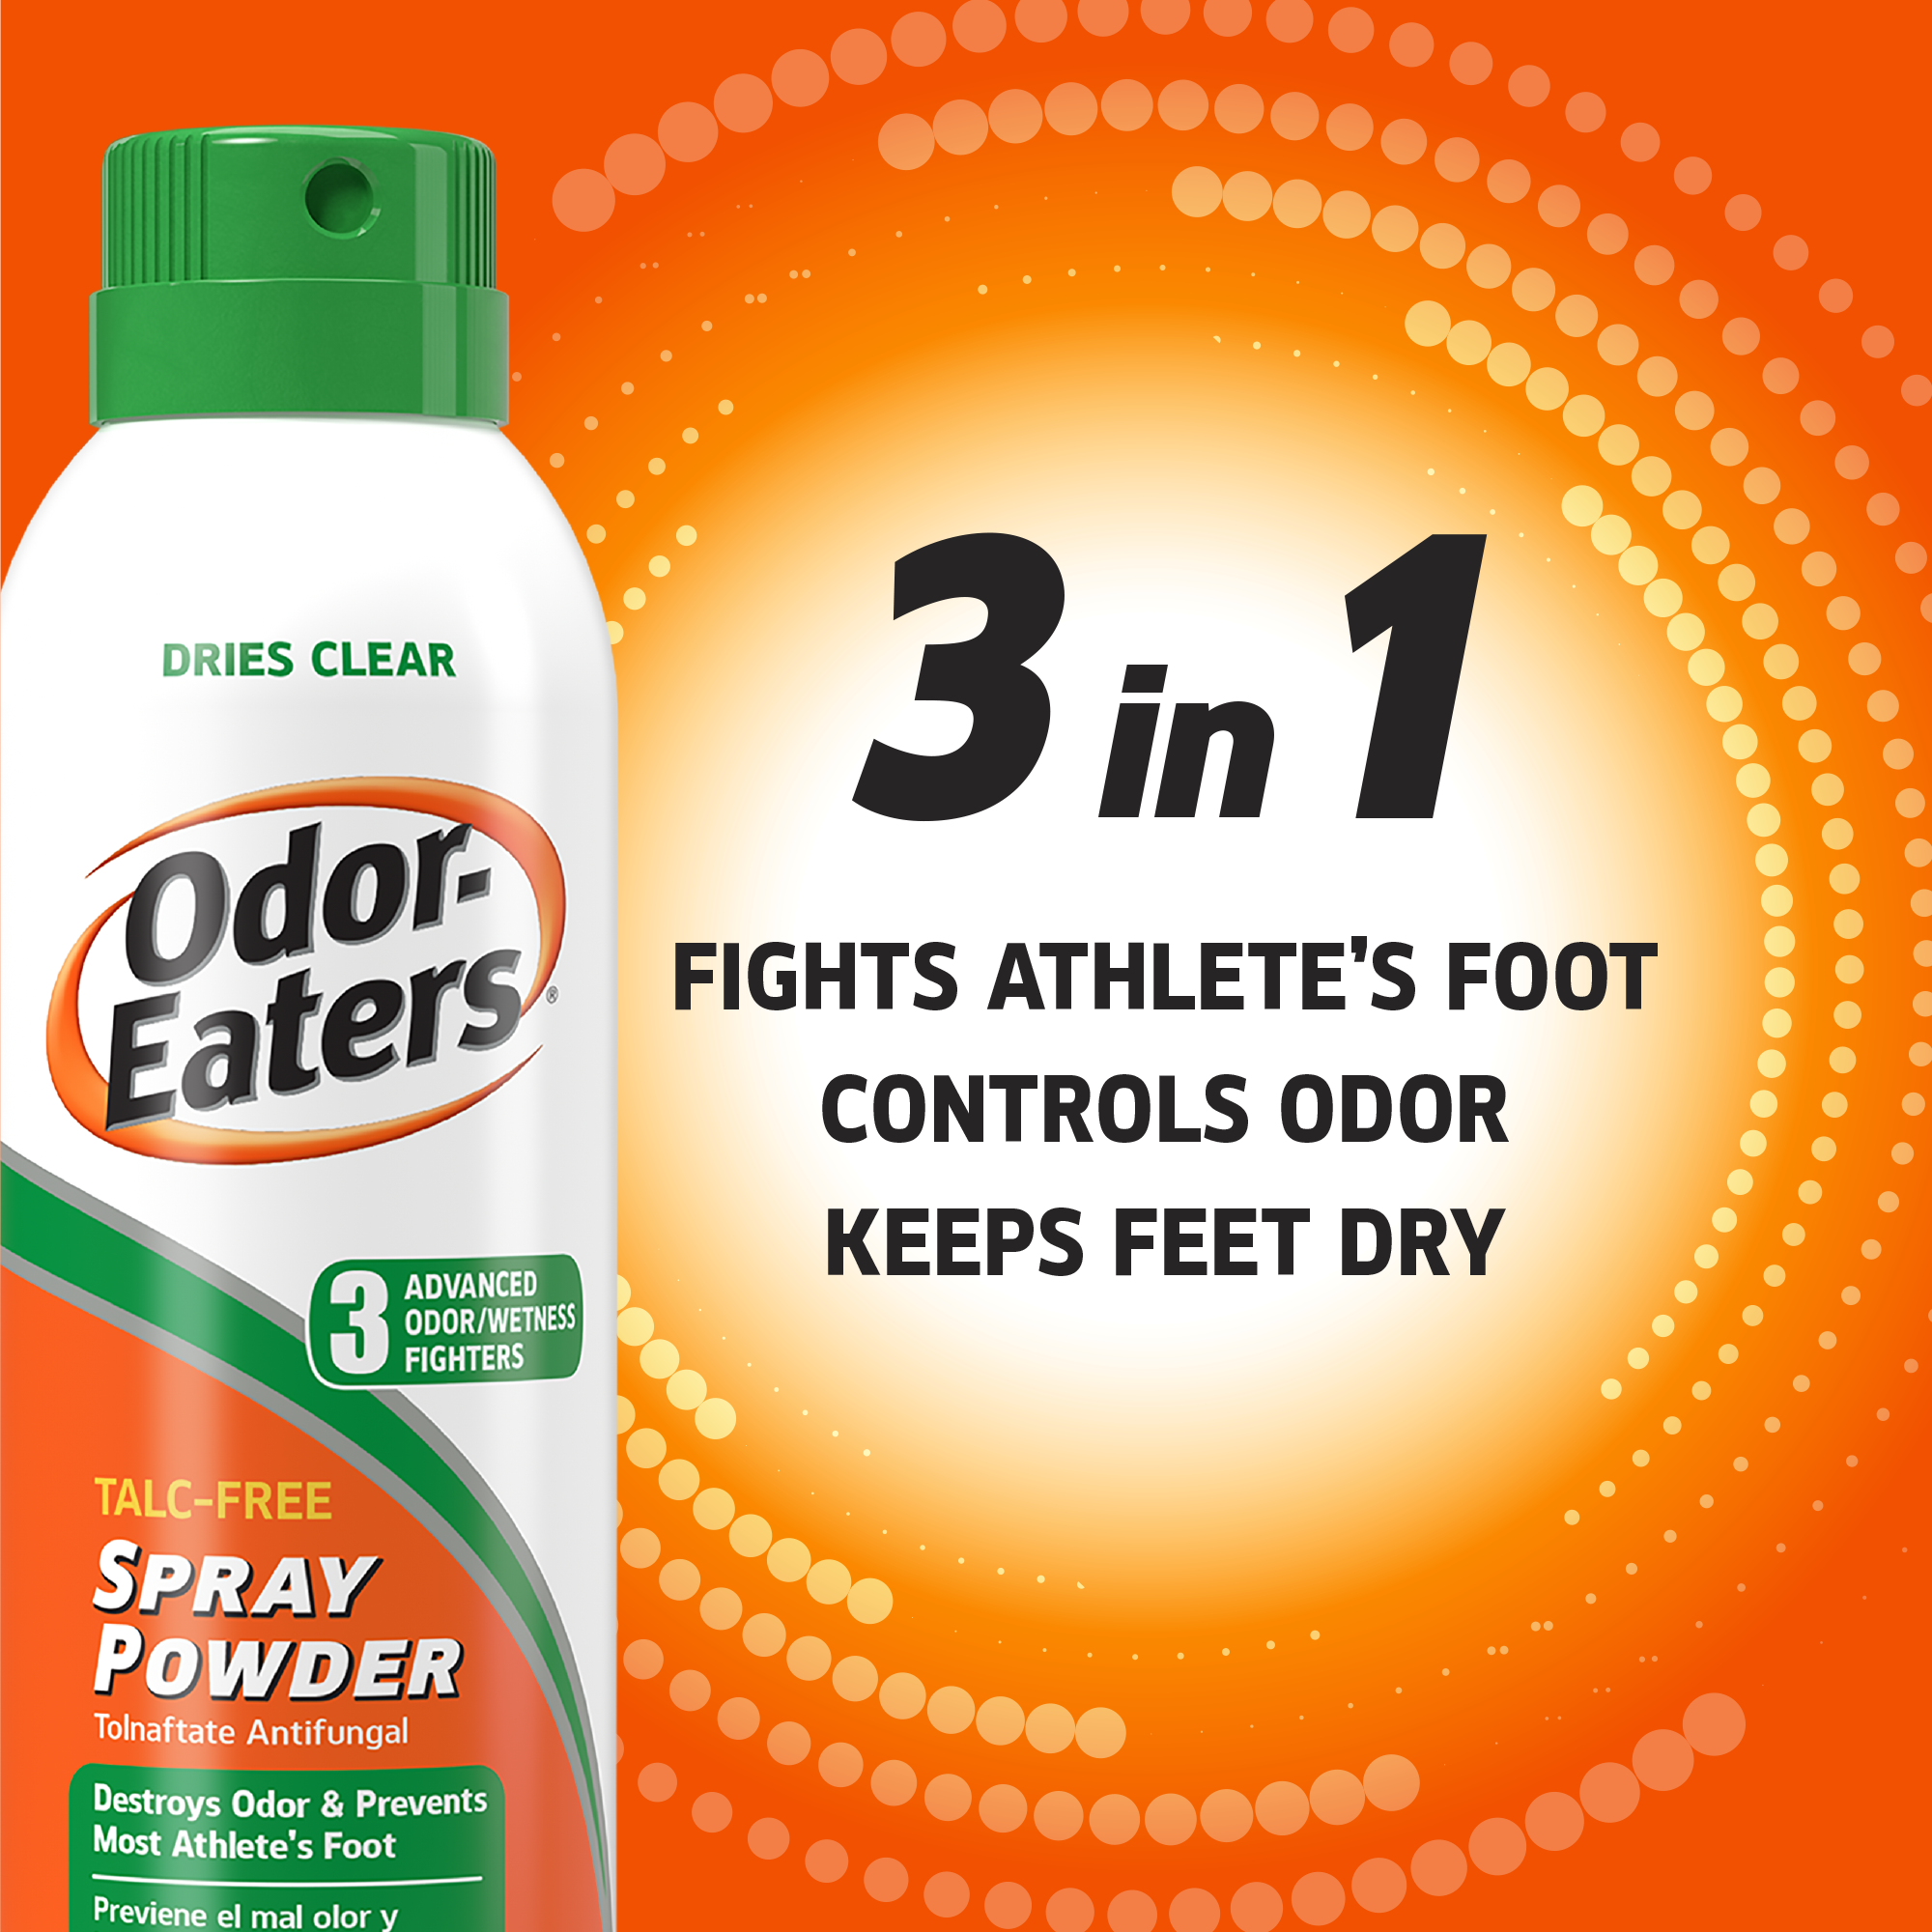 Odor-Eaters Foot Spray Powder Deodorant, Odor Control, & Sweat Absorbing, 4 oz - image 4 of 10